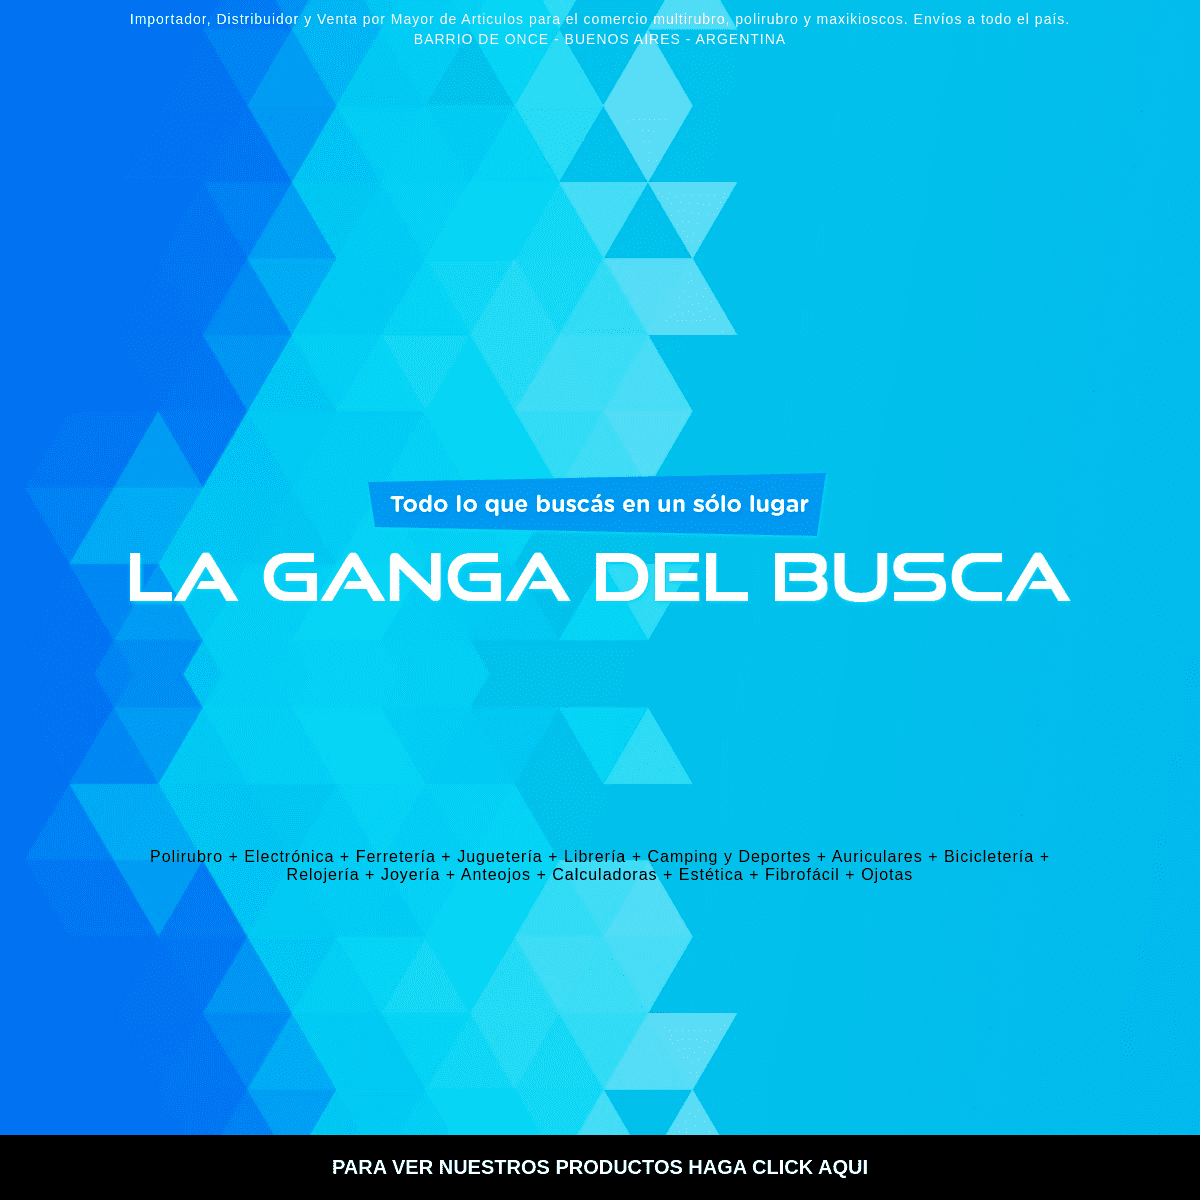 A complete backup of lagangadelbusca.com.ar